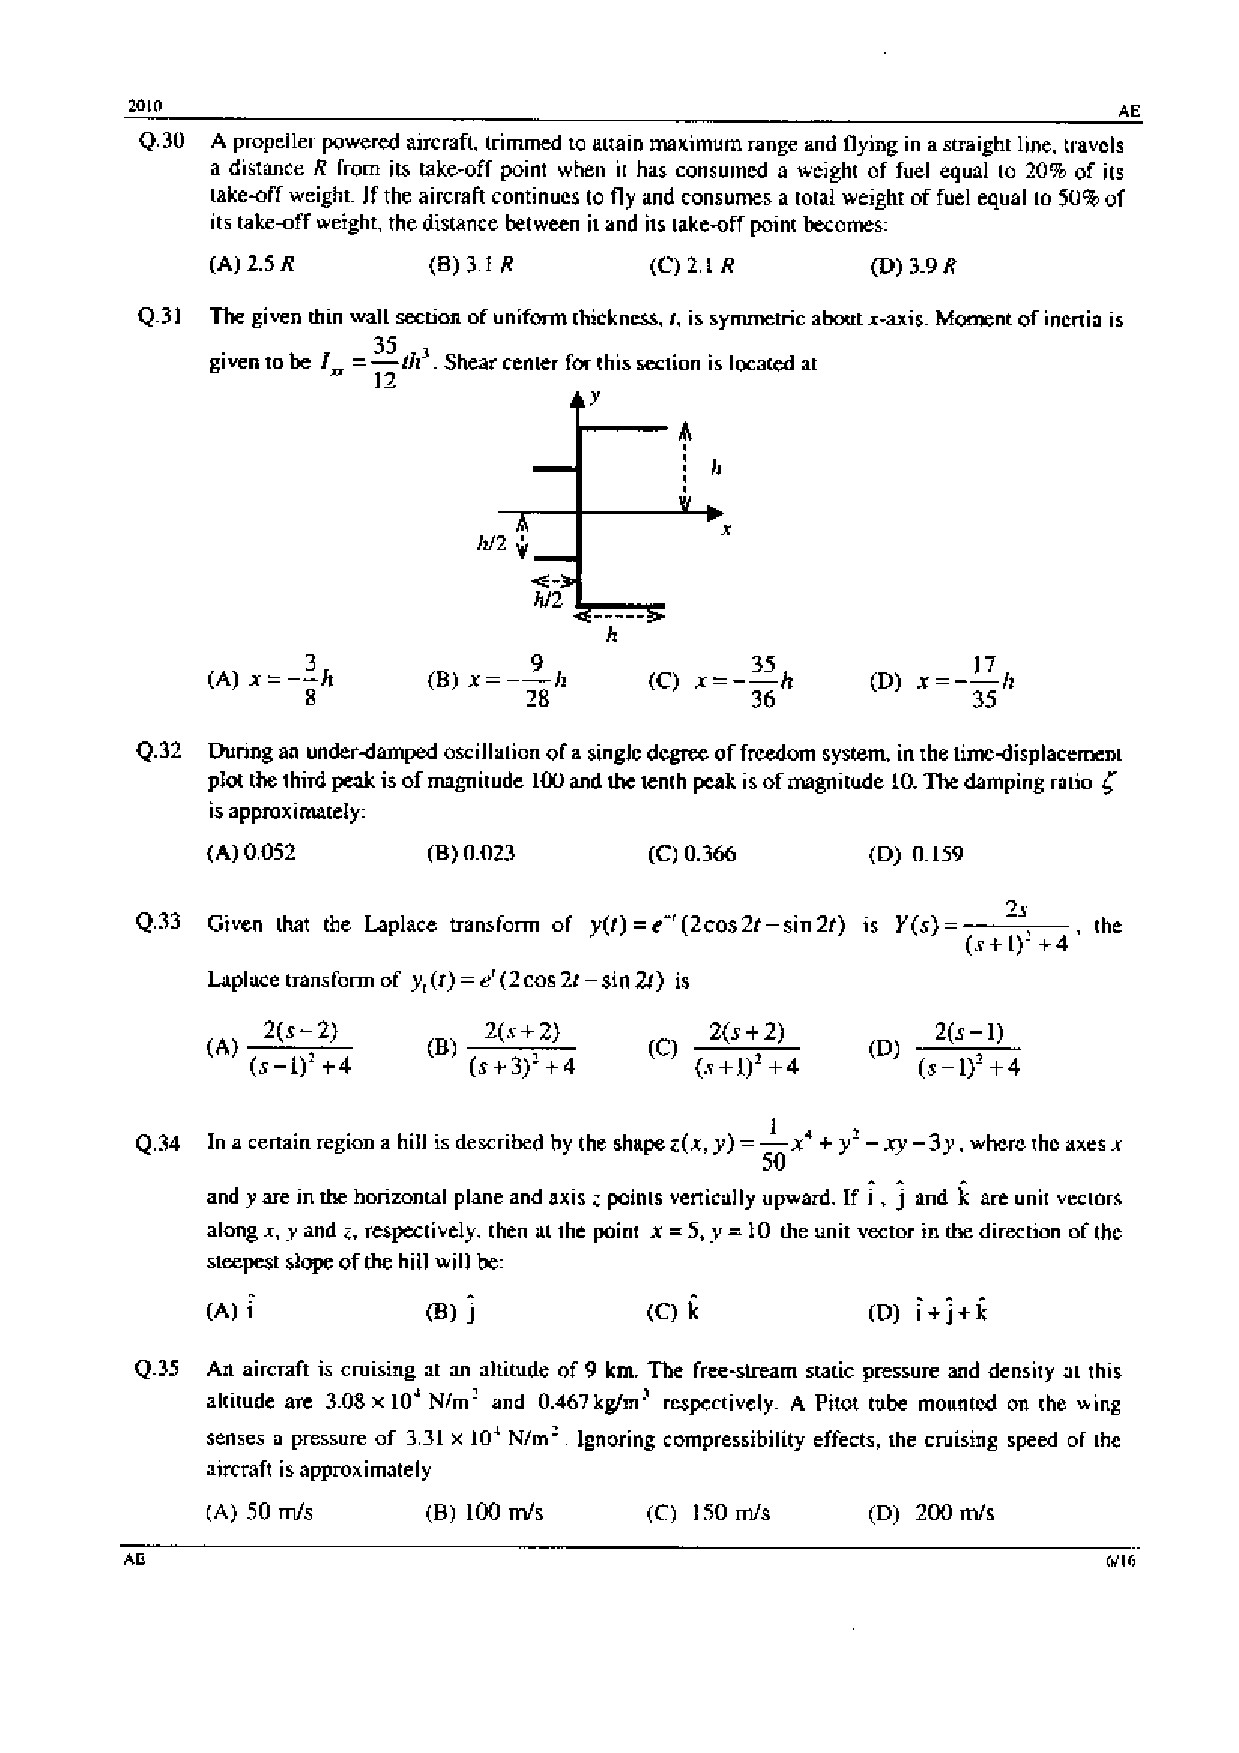 GATE Exam 2010 Aerospace Engineering Question Paper 6